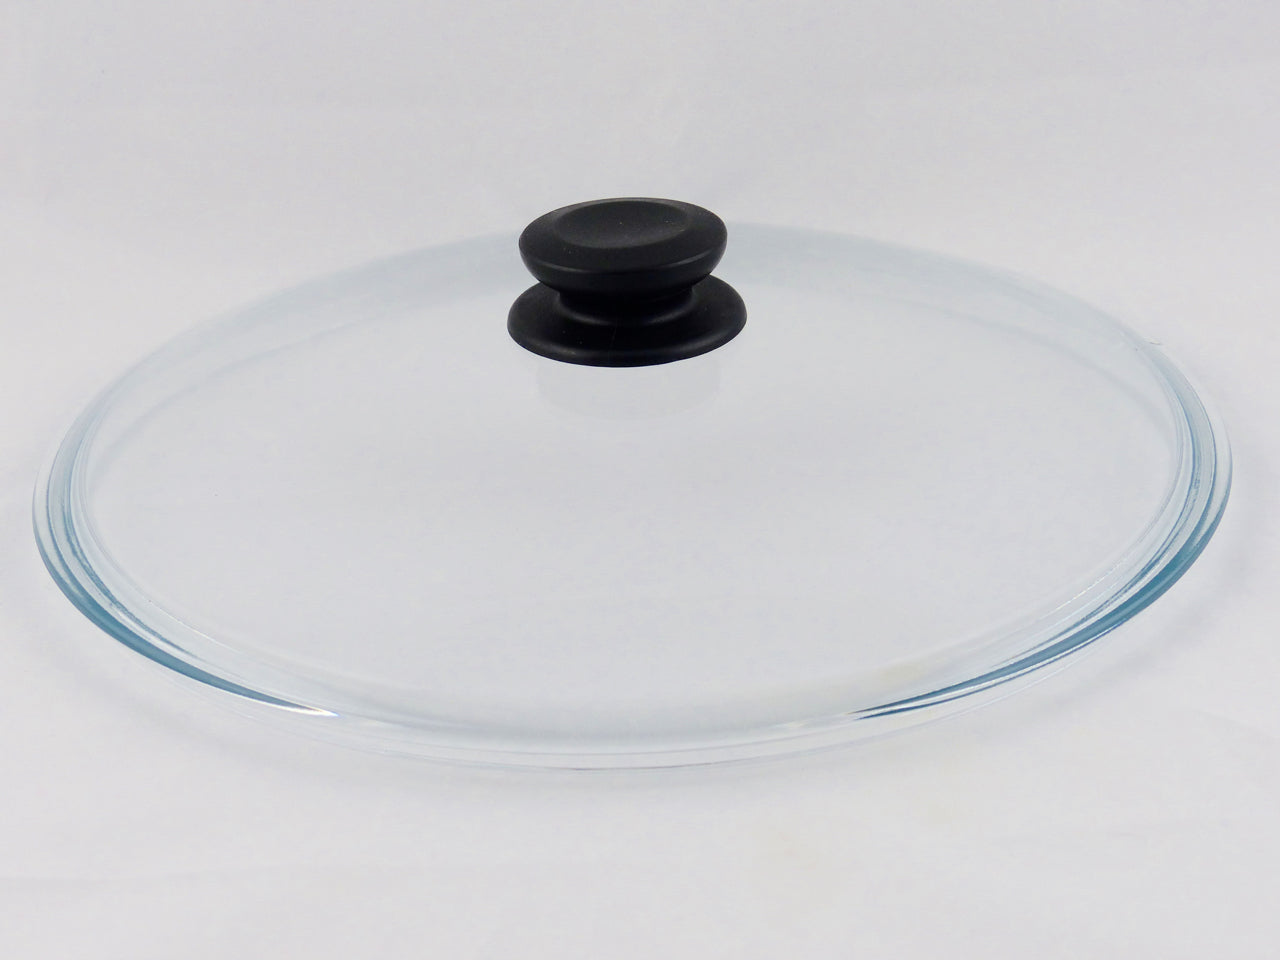 Simax-Glasdeckel aus Borosilikatglas mit schwarzem Bakelitknopf